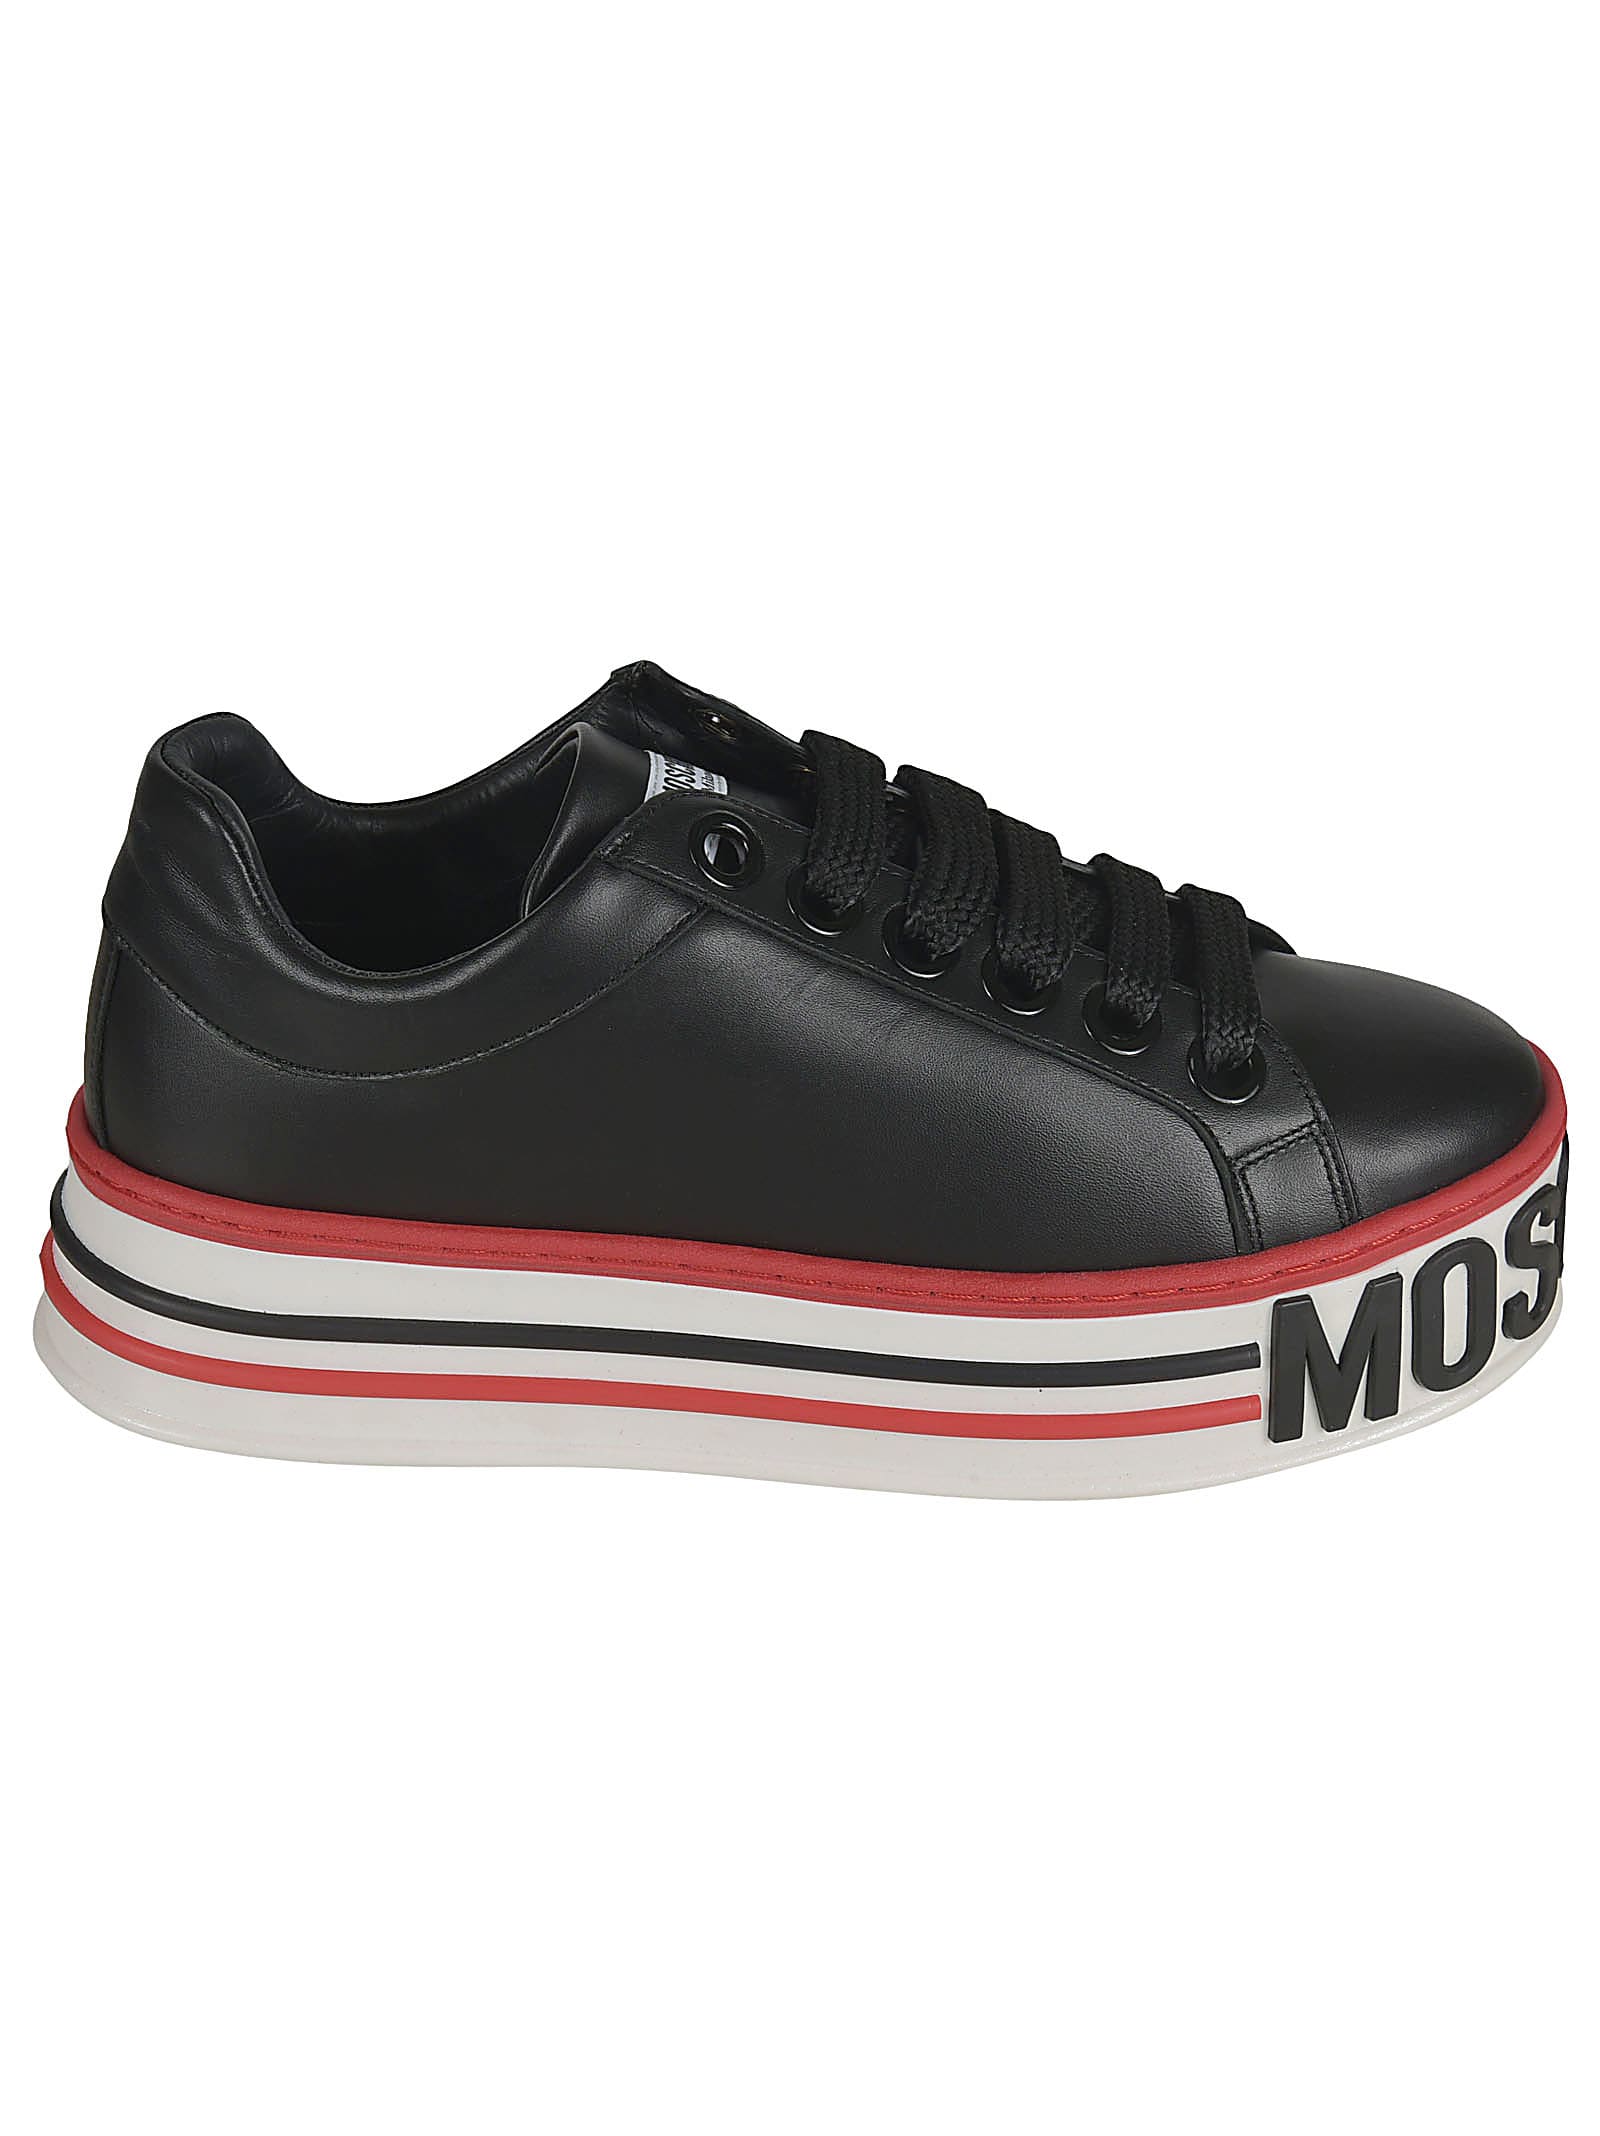 Moschino Embossed Logo Platform Sneakers